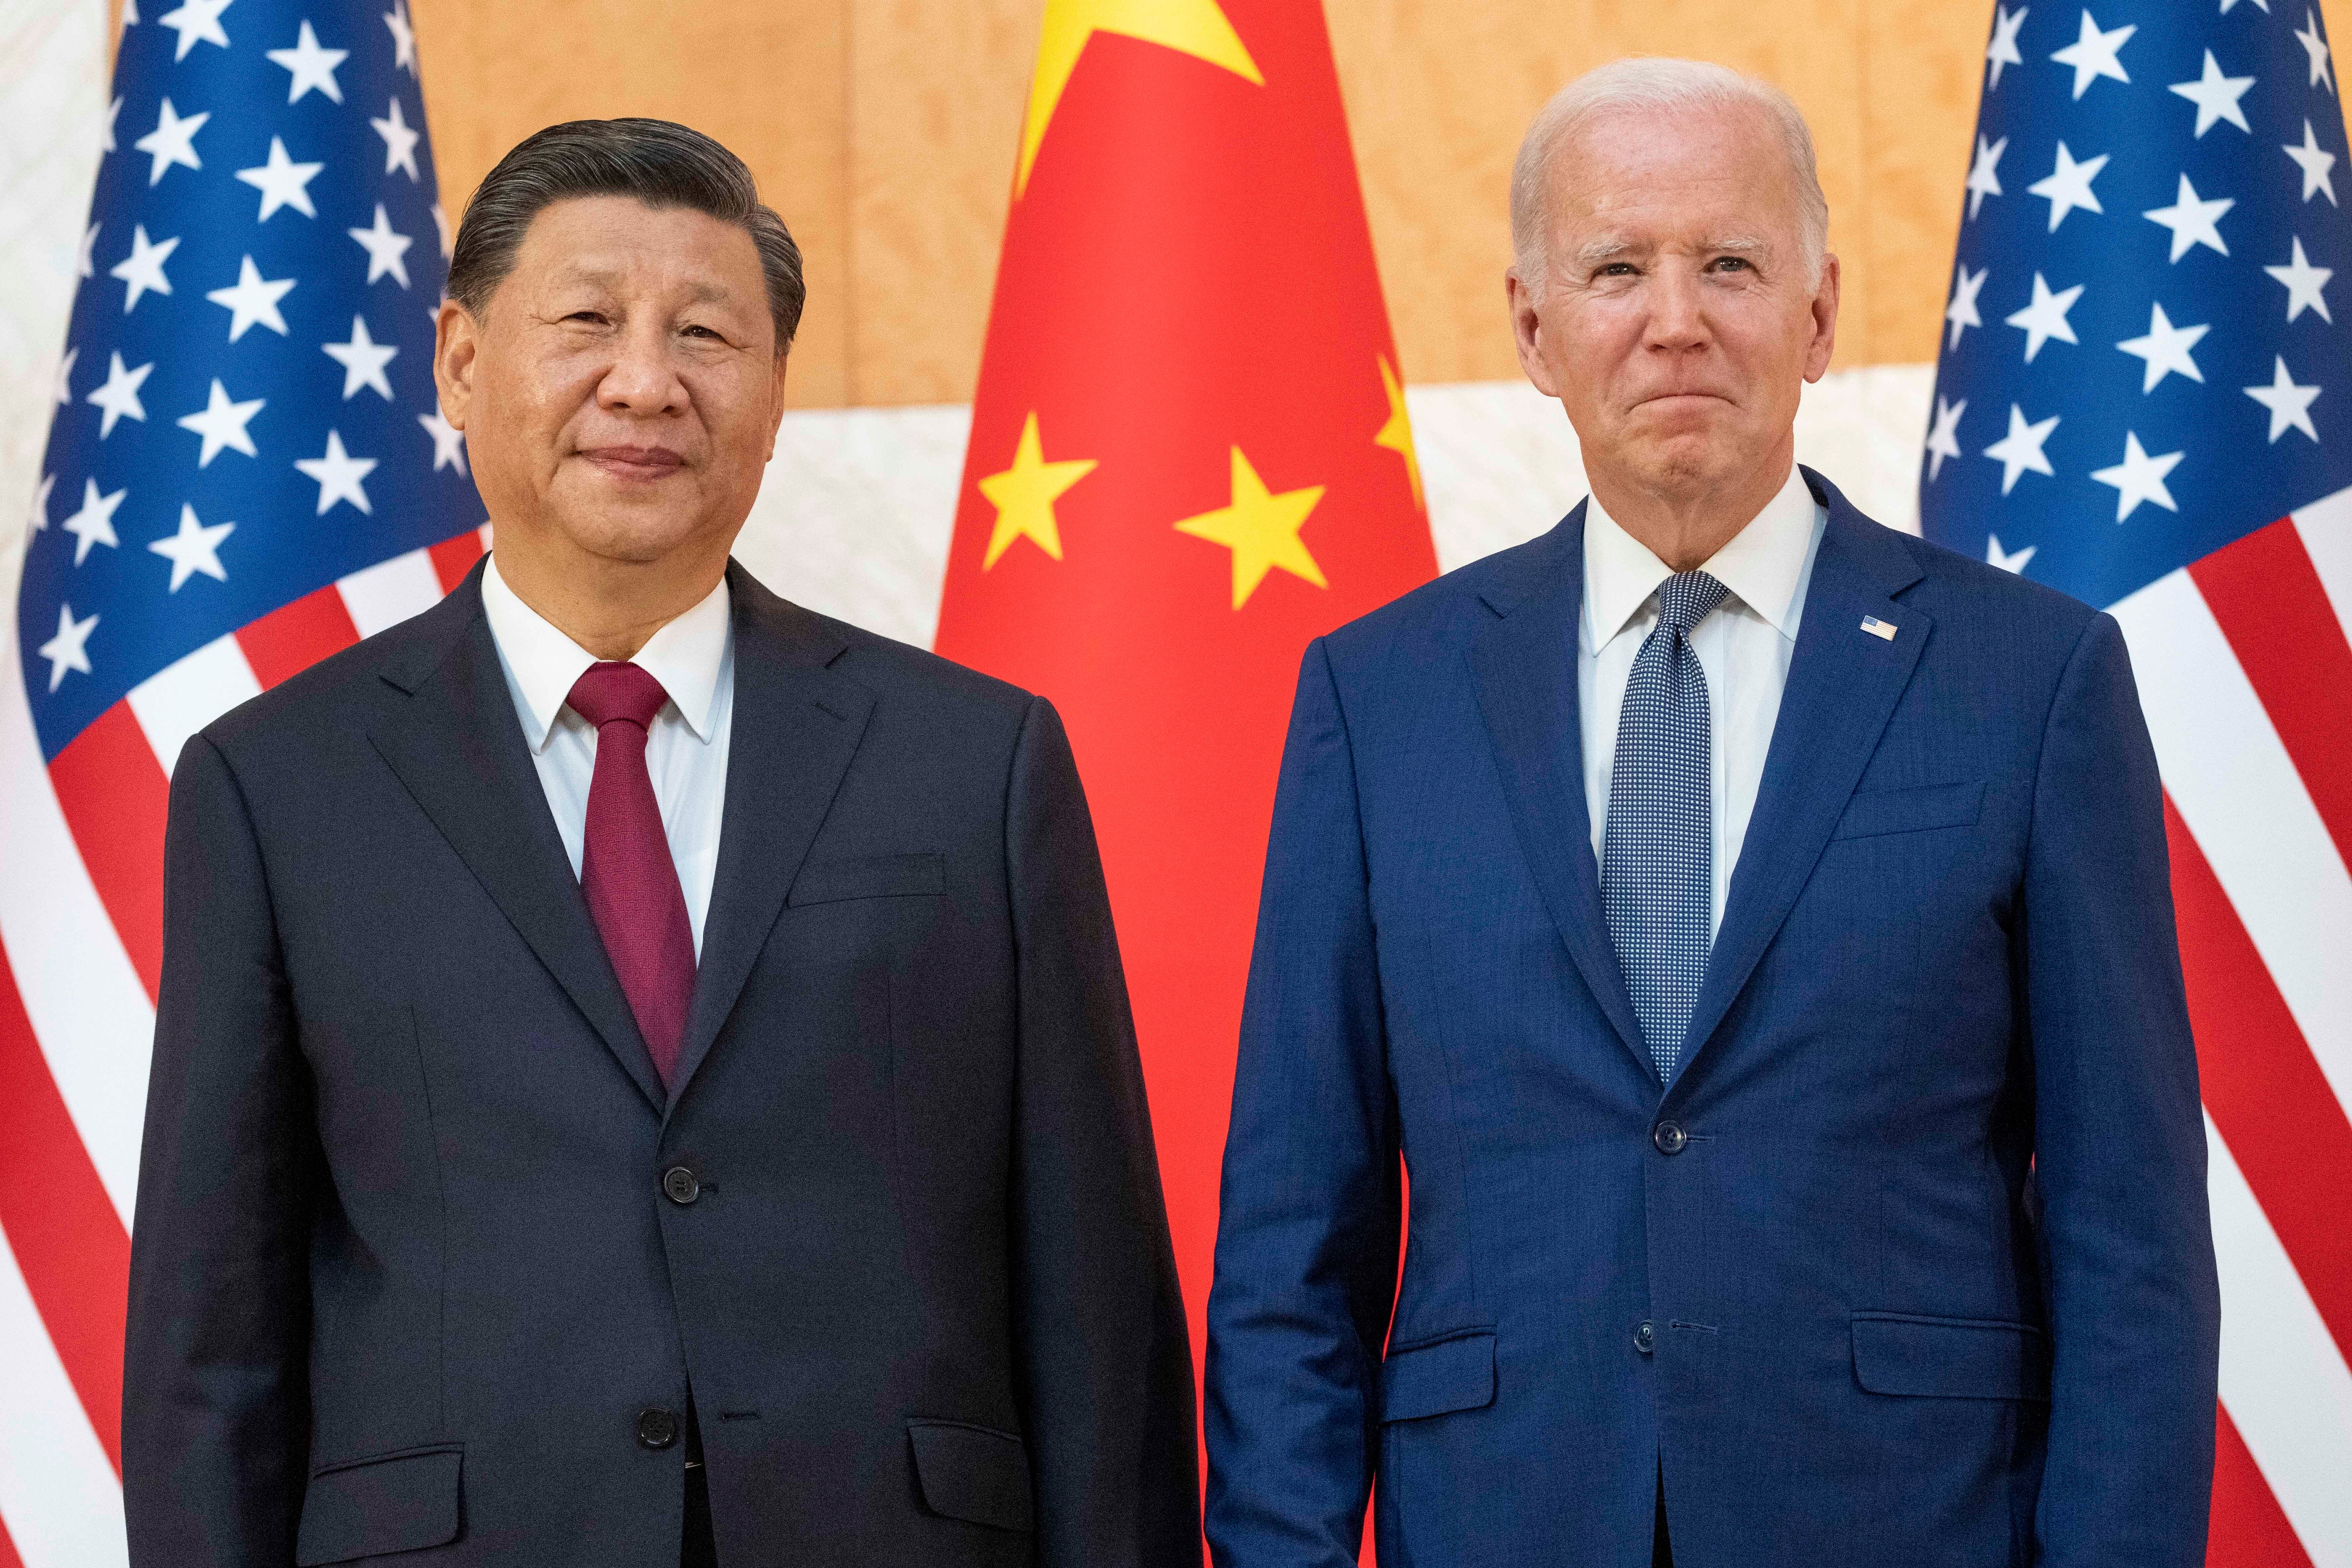 Xi and Biden at last year’s G20 summit